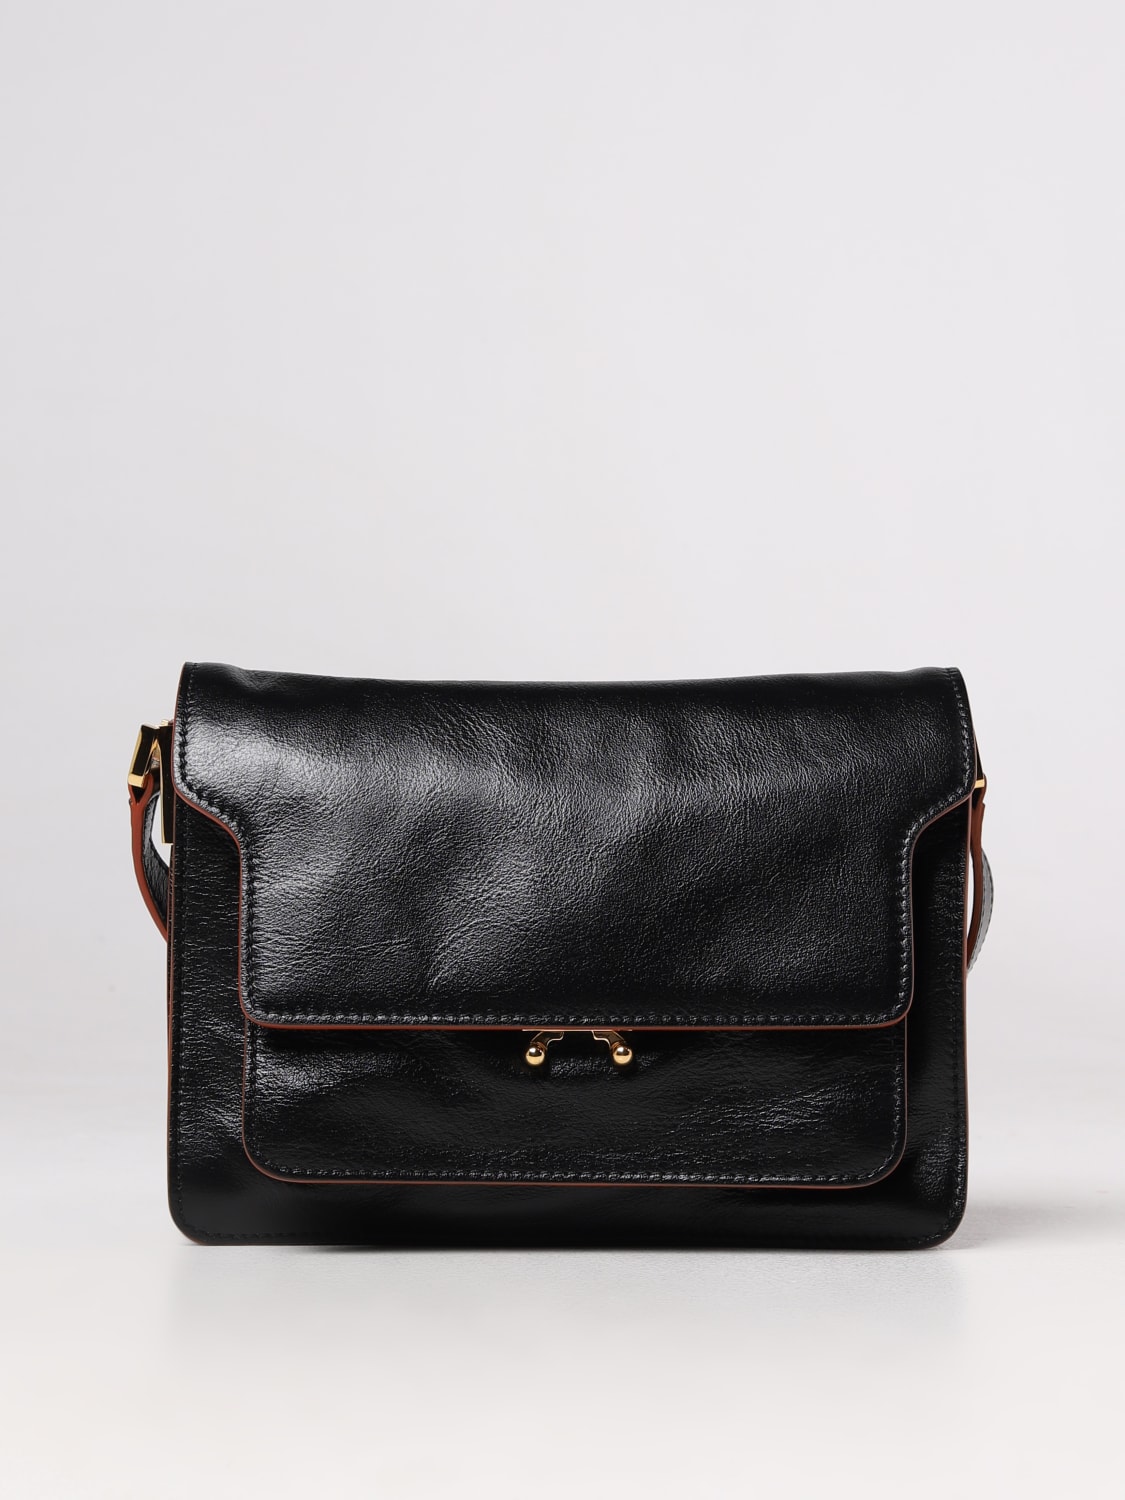 Marni Soft Mini Trunk Bag in Black